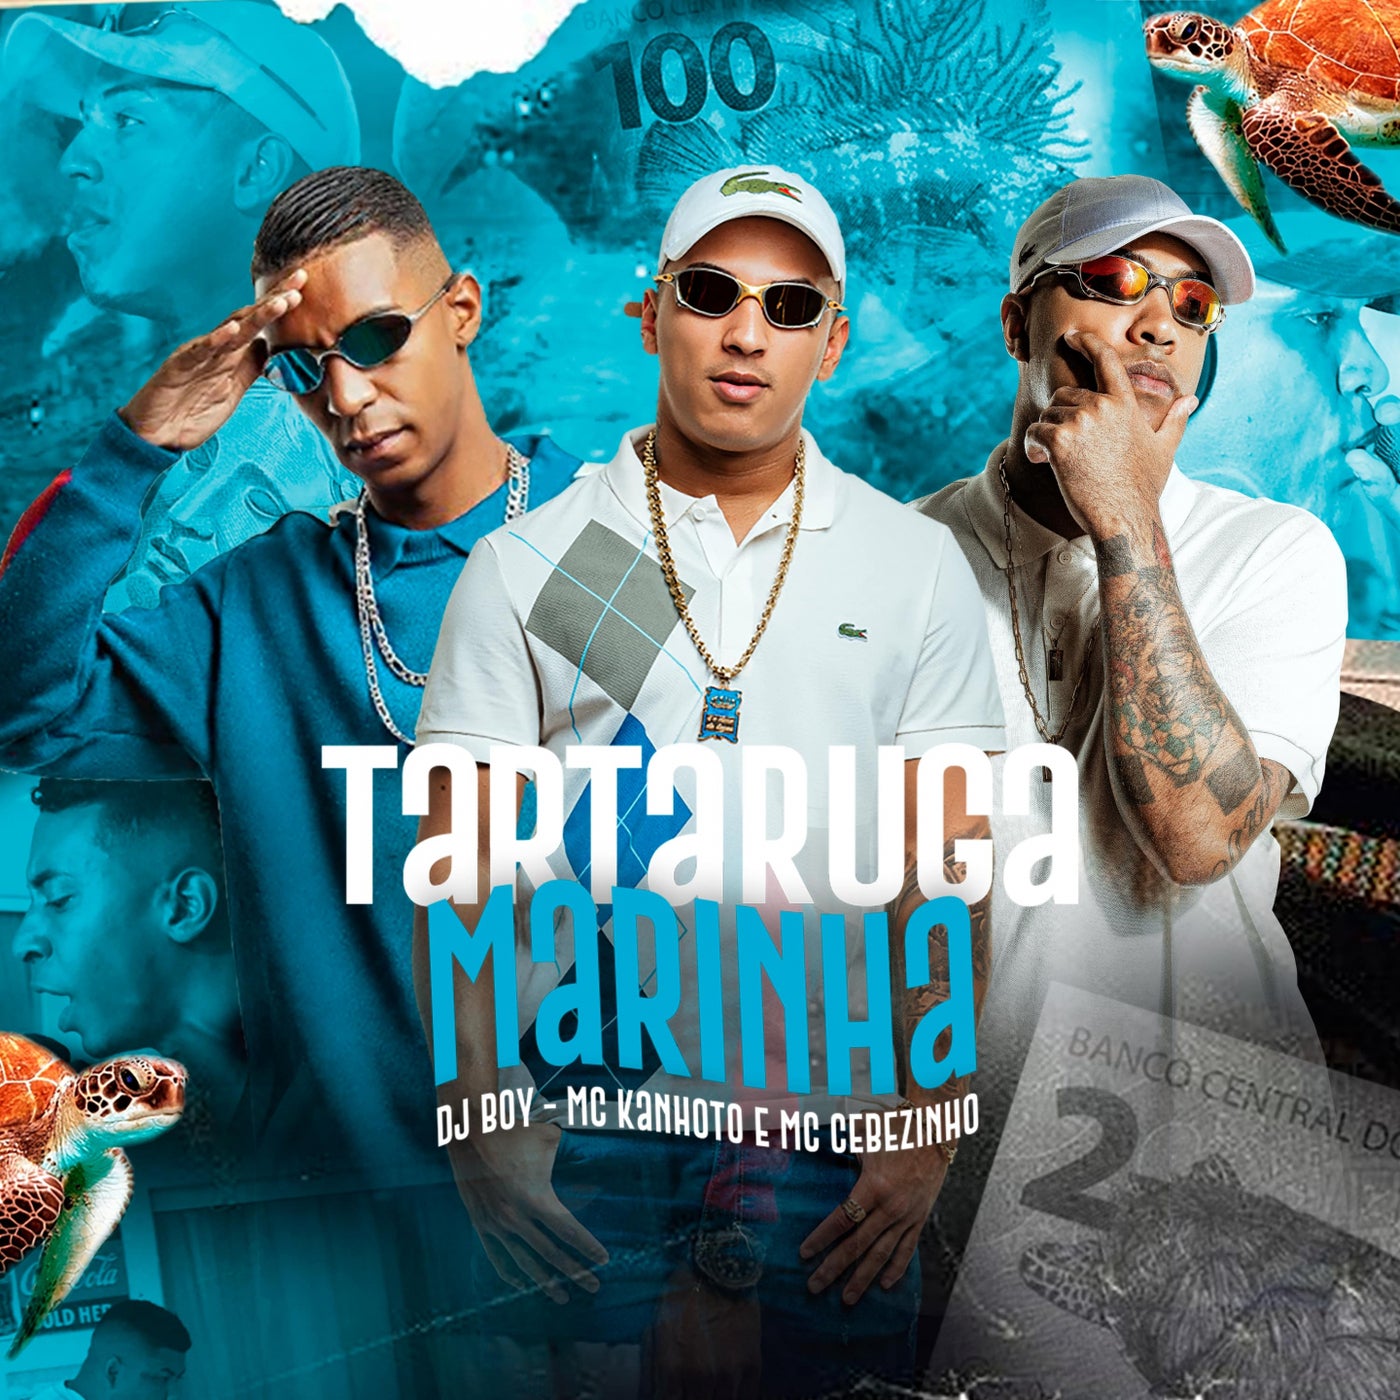 Tartaruga Marinha by MC Cebezinho, Mc Kanhoto and DJ BOY on Beatsource